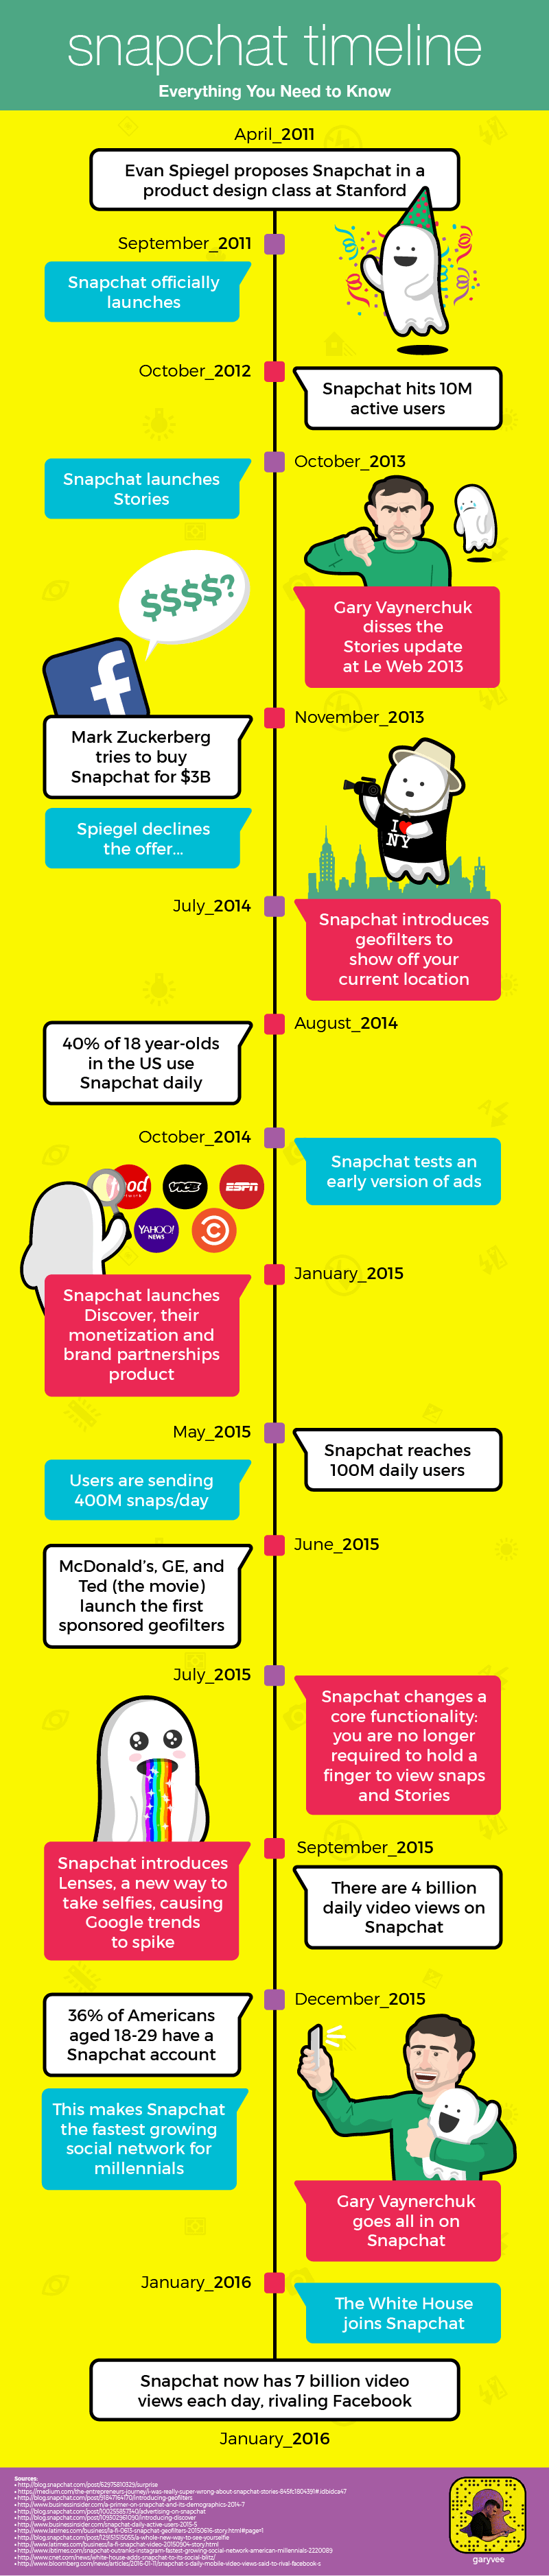 The History of Snapchat